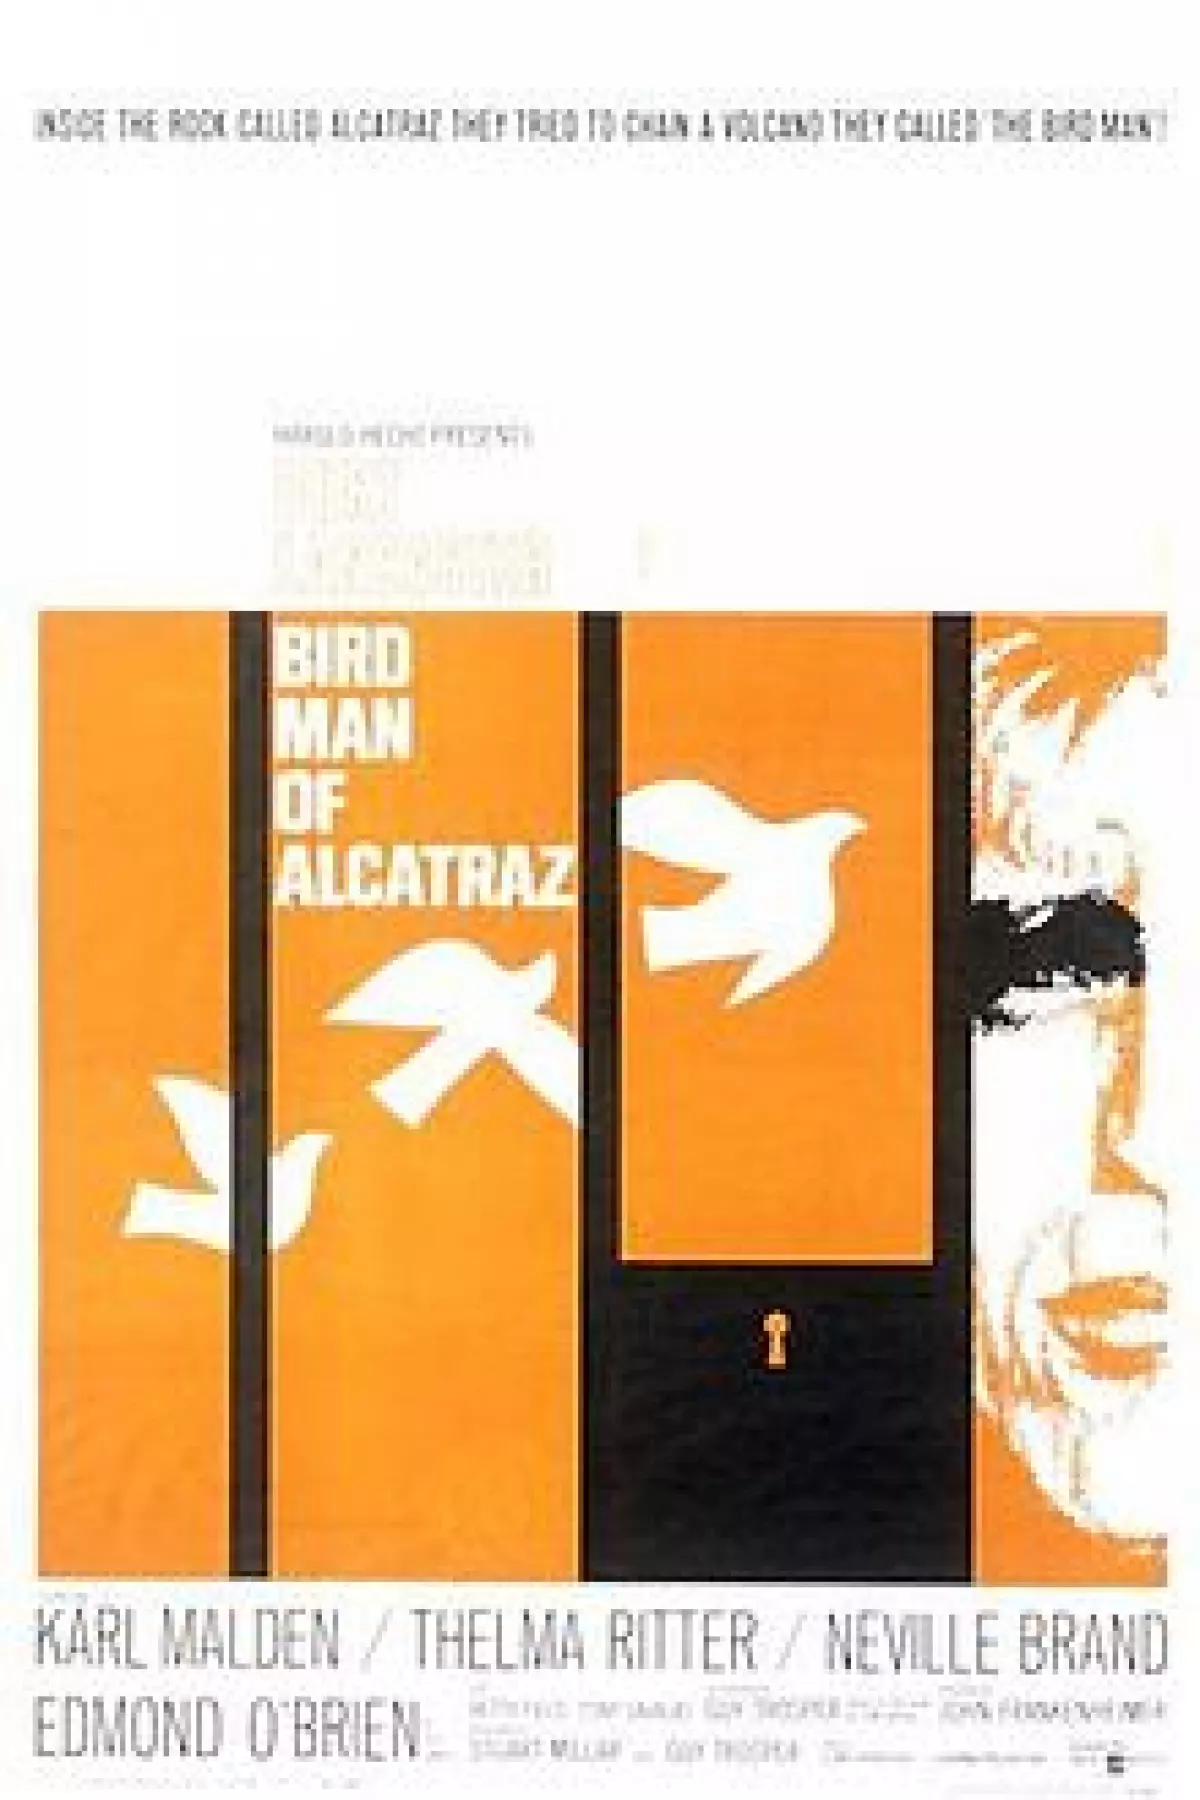 Birdman of Alcatraz (film)